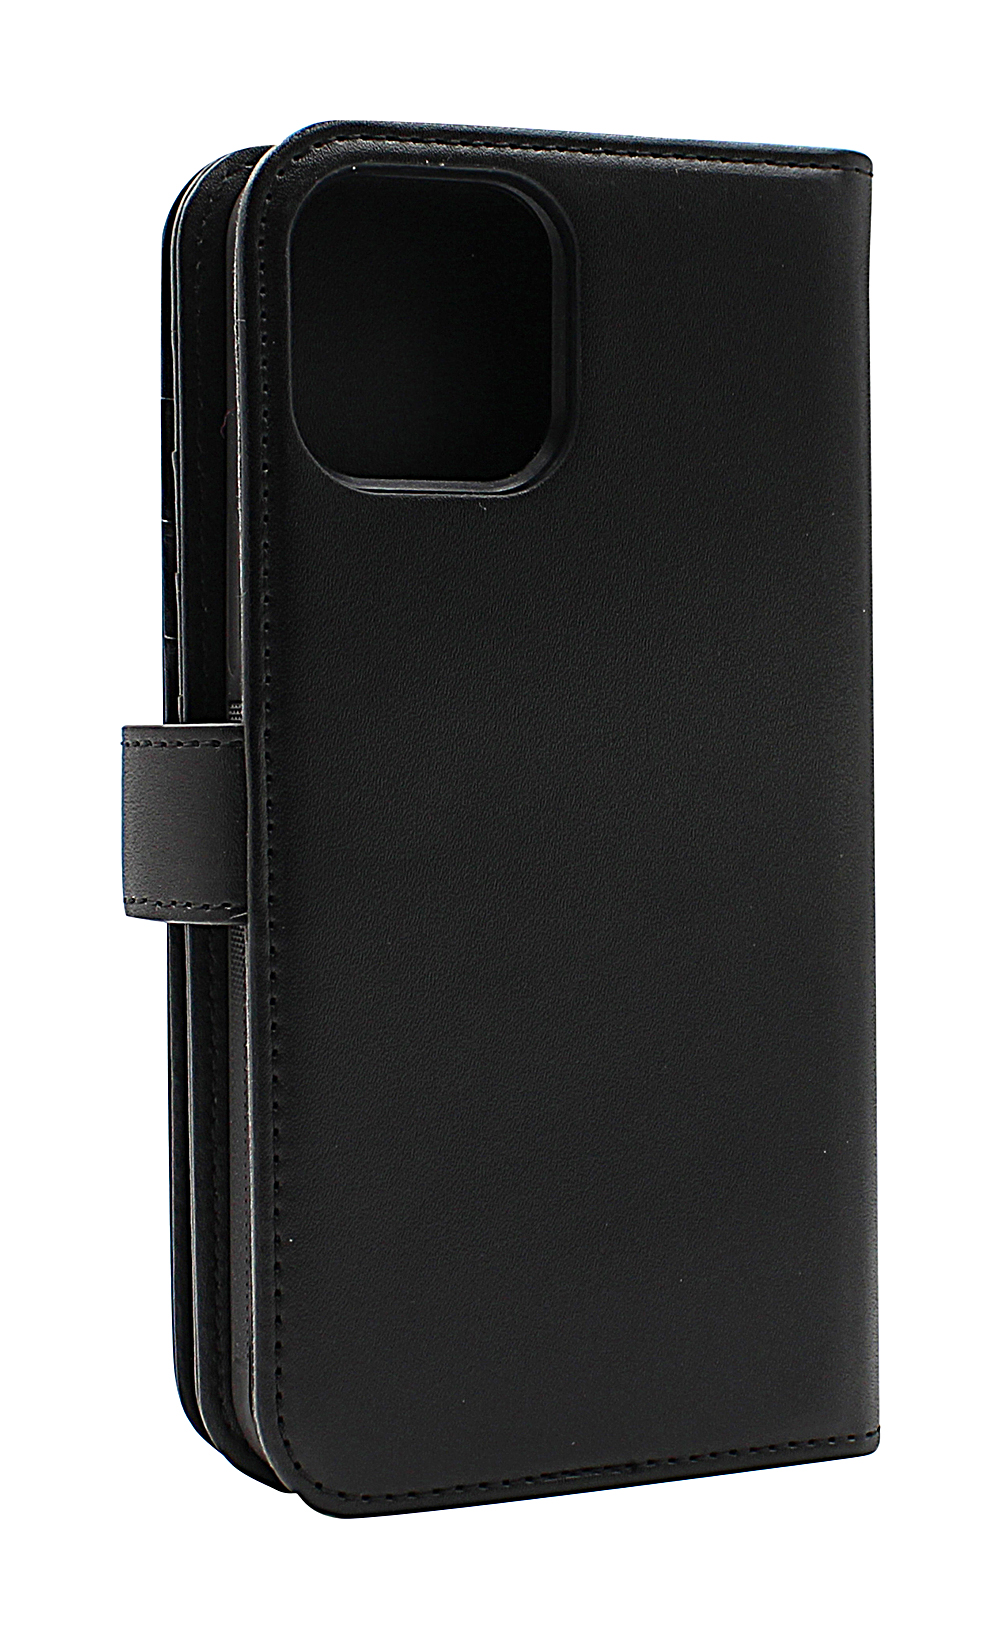 Skimblocker XL Magnet Wallet iPhone 13 Pro Max (6.7)